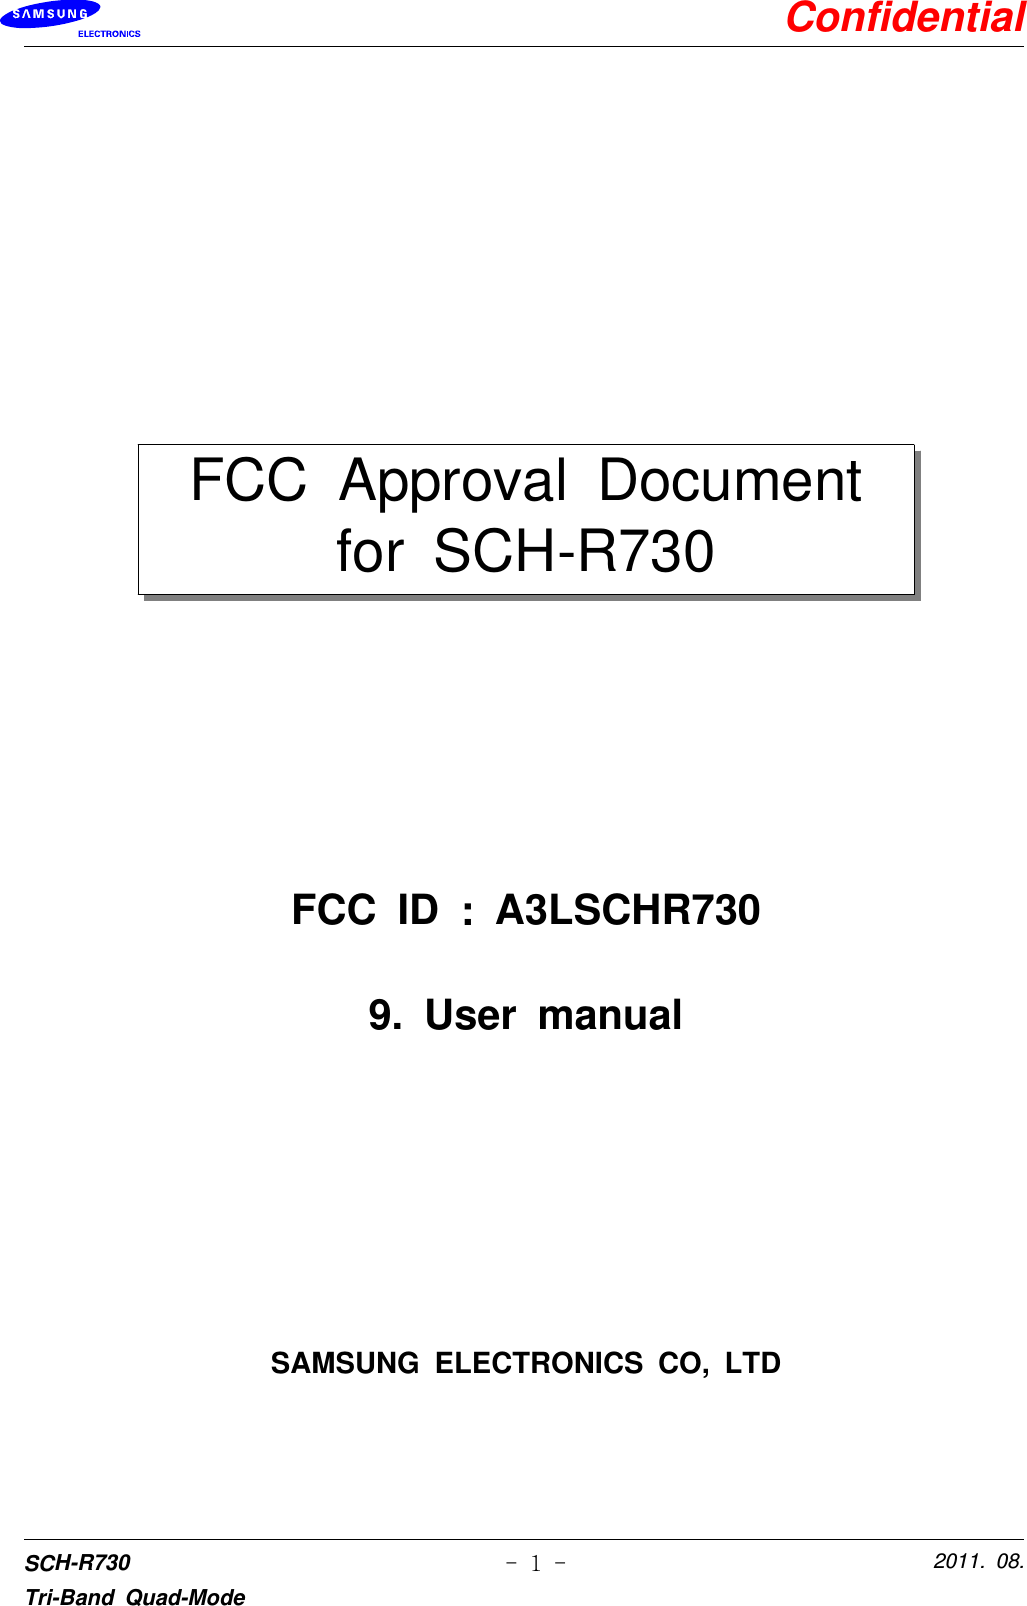 ConfidentialSCH-R730Tri-Band Quad-Mode2011. 08.-1-FCC Approval Documentfor SCH-R730FCC ID :A3LSCHR7309. User manualSAMSUNG ELECTRONICS CO, LTD